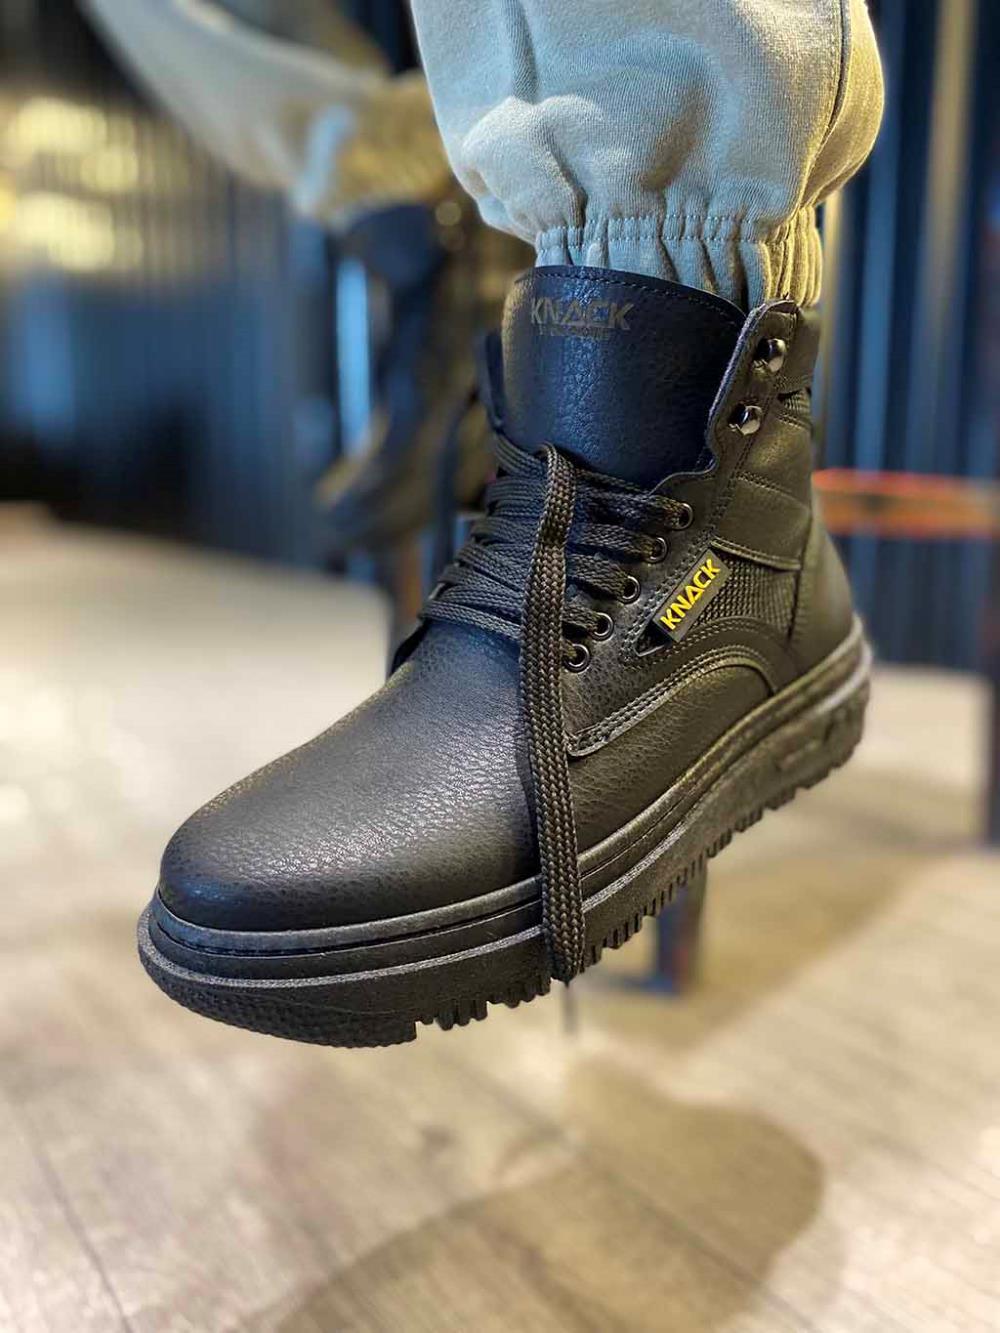 Men's High Sole Boots 230 Black (Black Sole) - STREET MODE ™